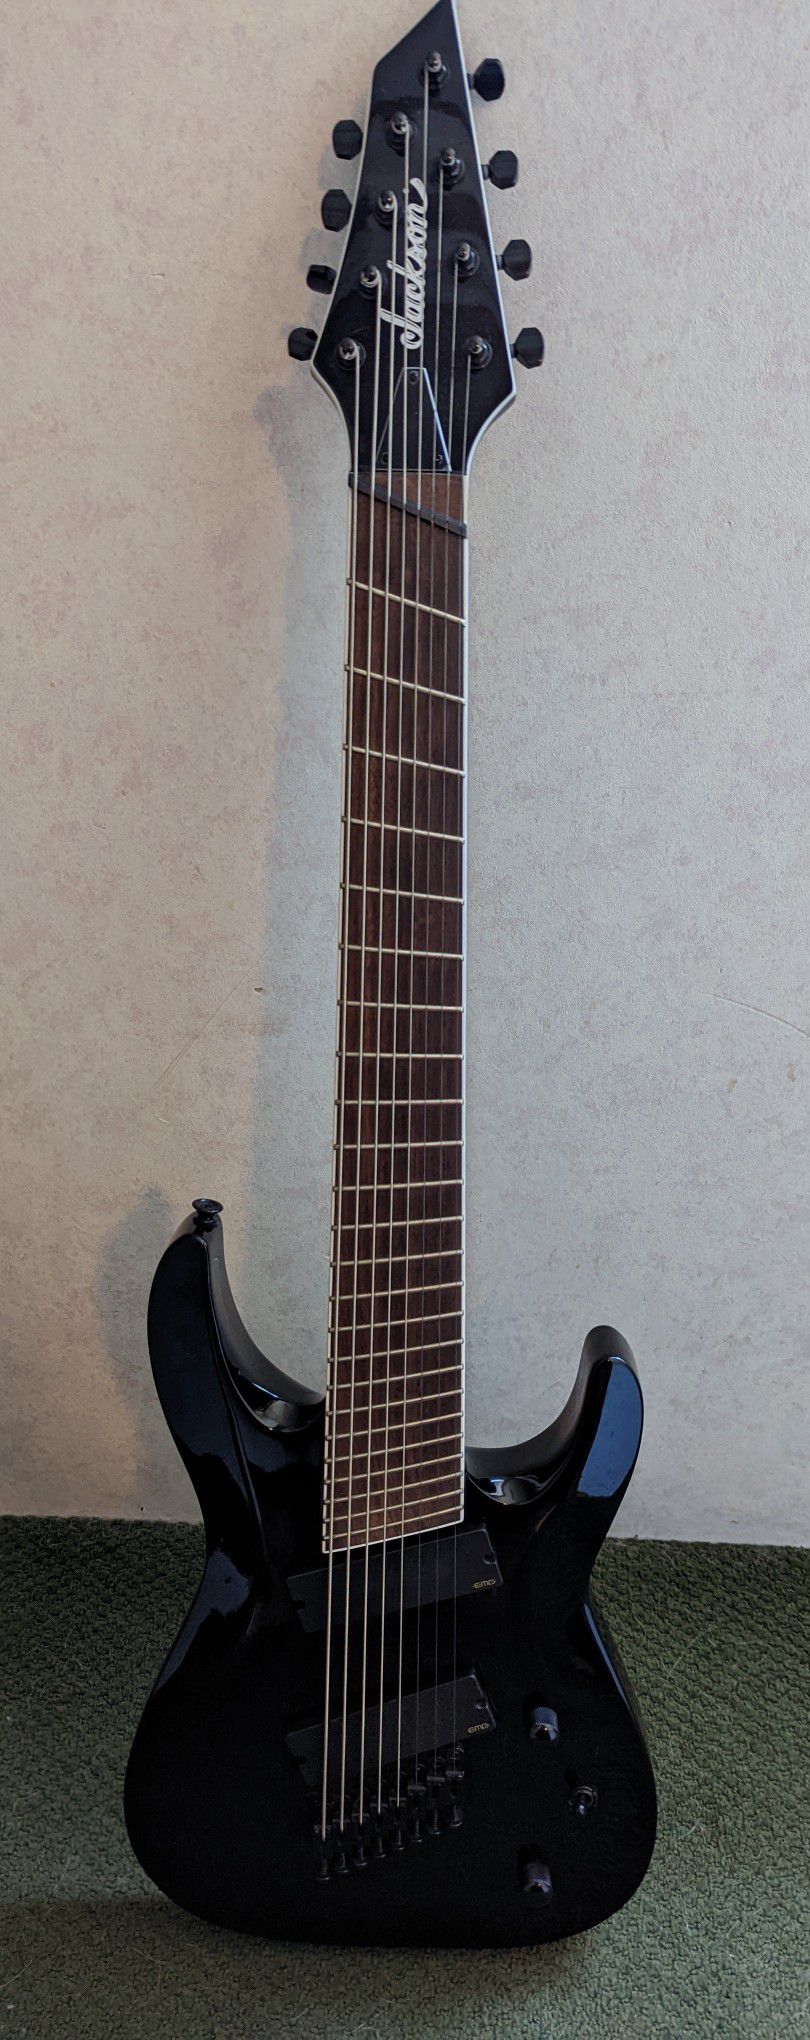 Jackson SLAT8 8-string electric guitar